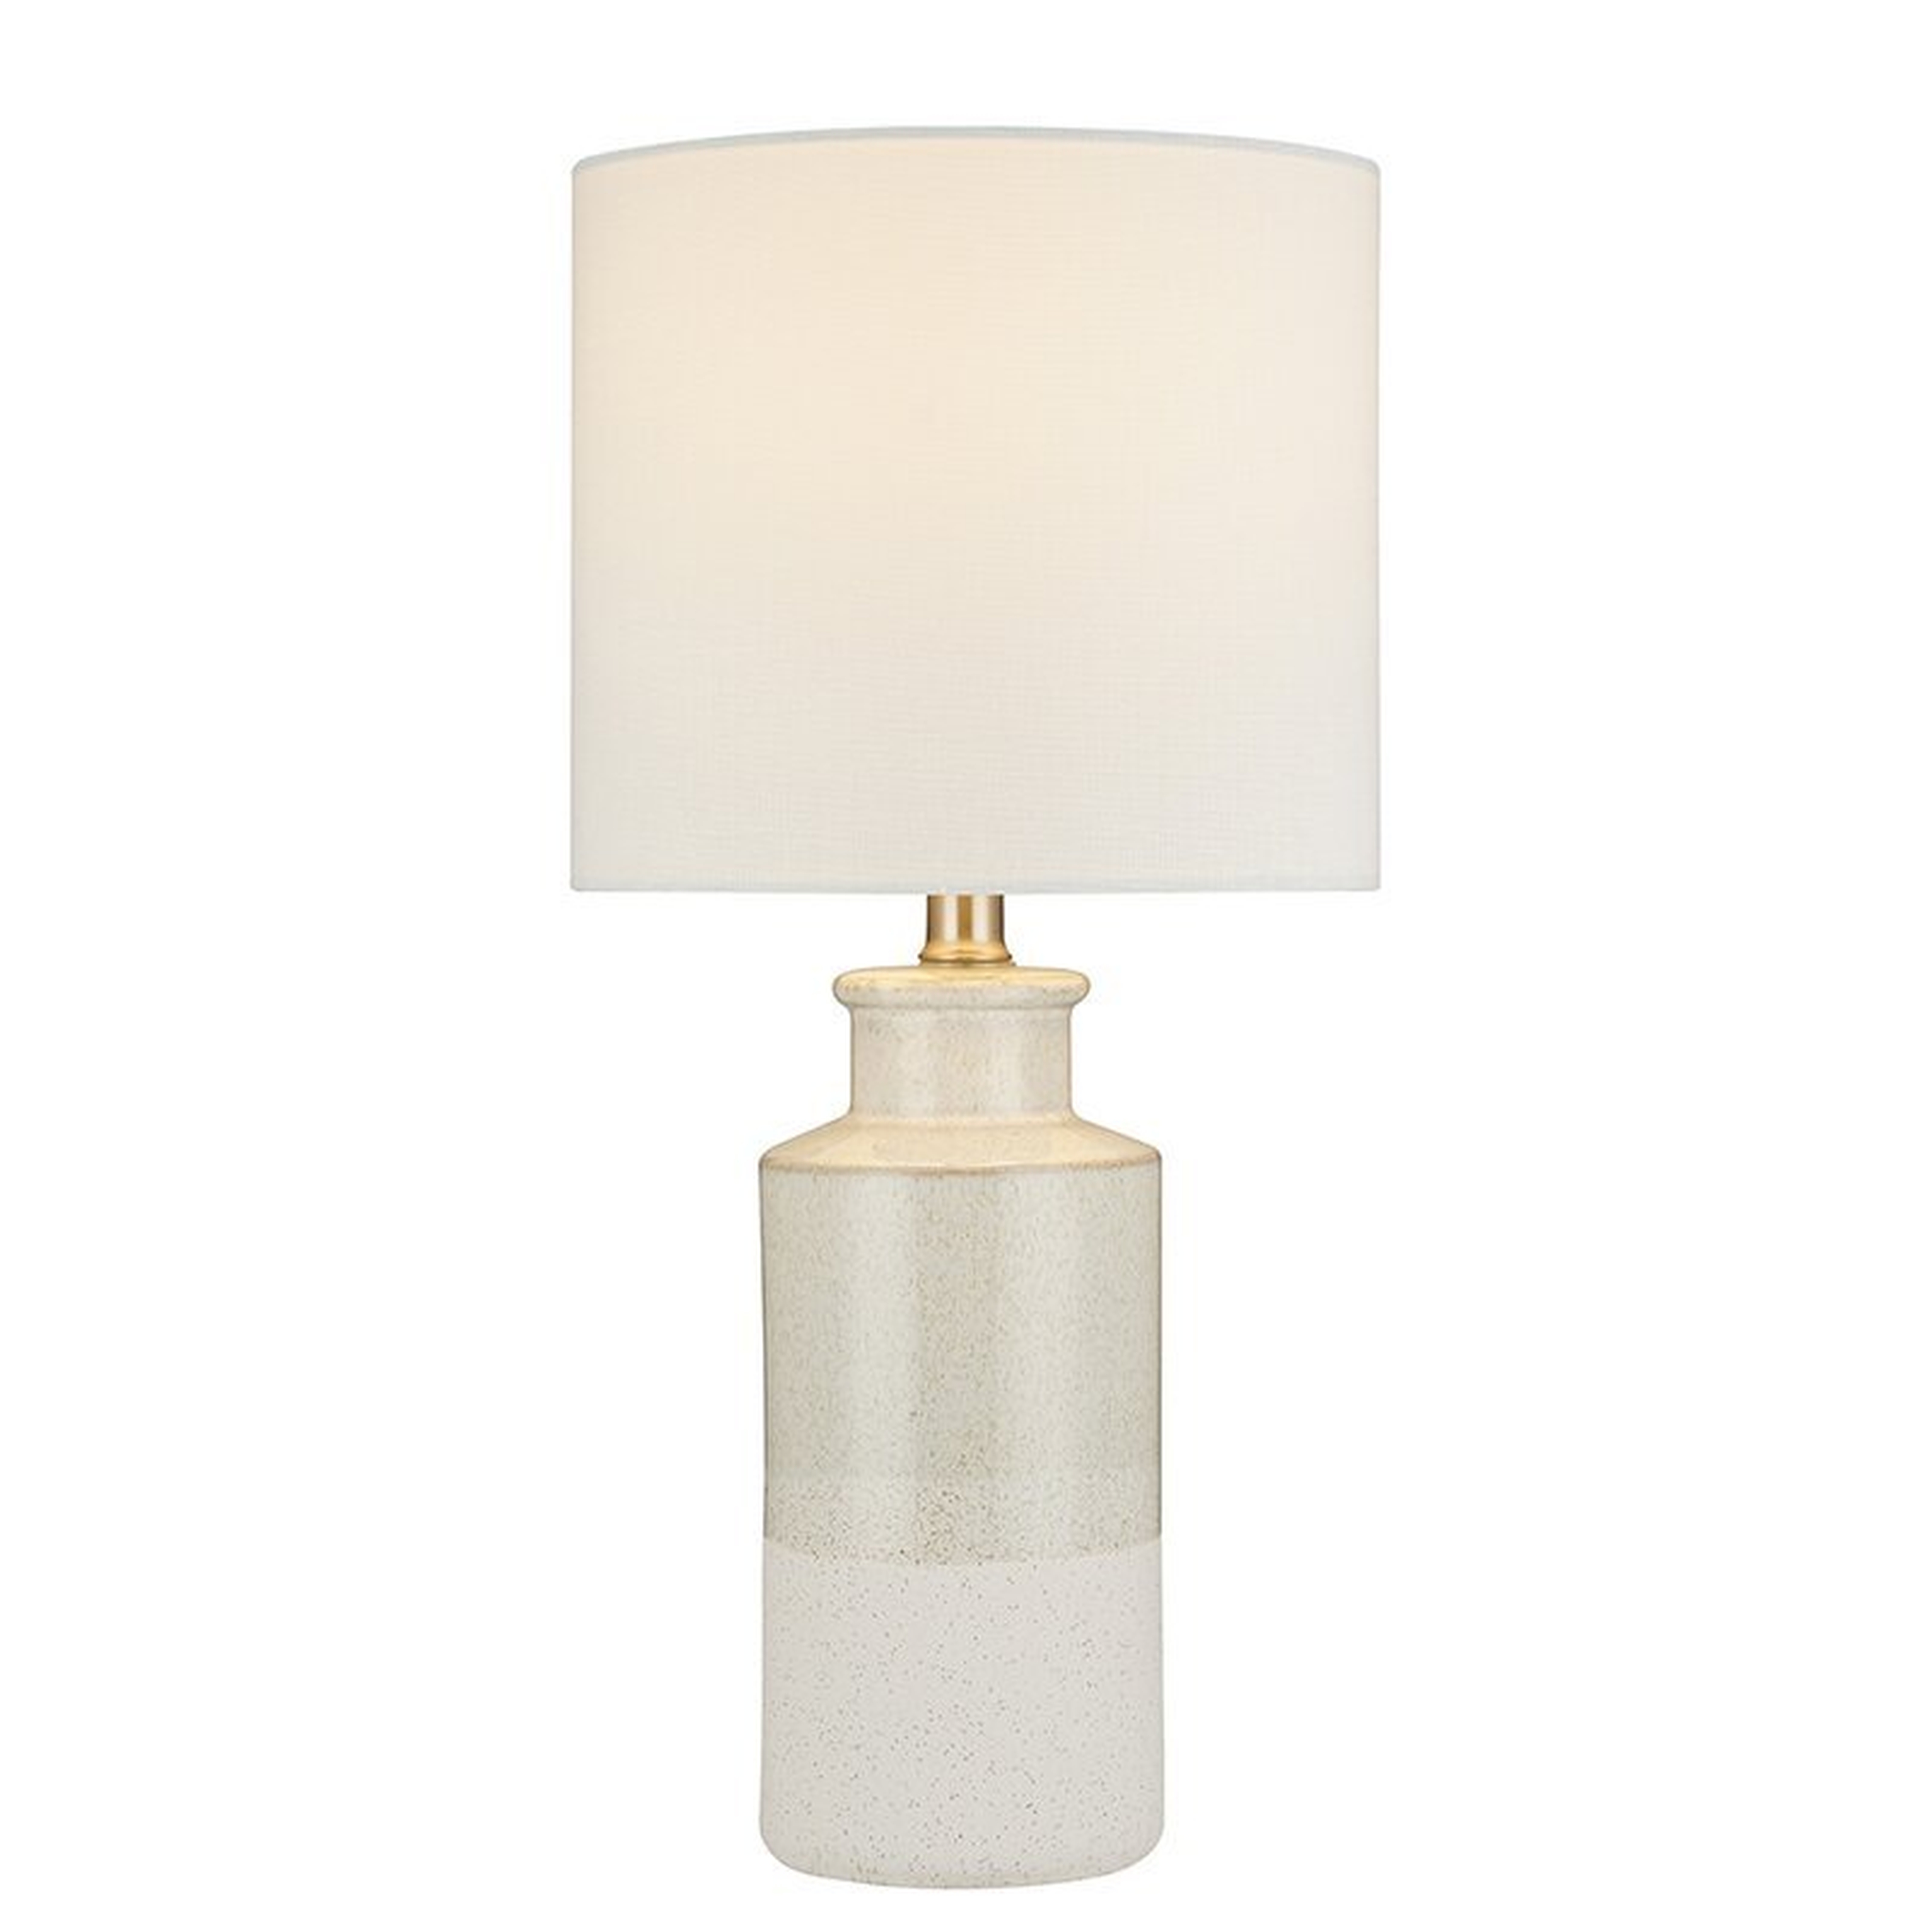 Bungalow Rose Ceramic Table Lamp, LED Bulb Included, 18.75", 5521A1609AF84BDAAE699E287F9882D9 - Wayfair